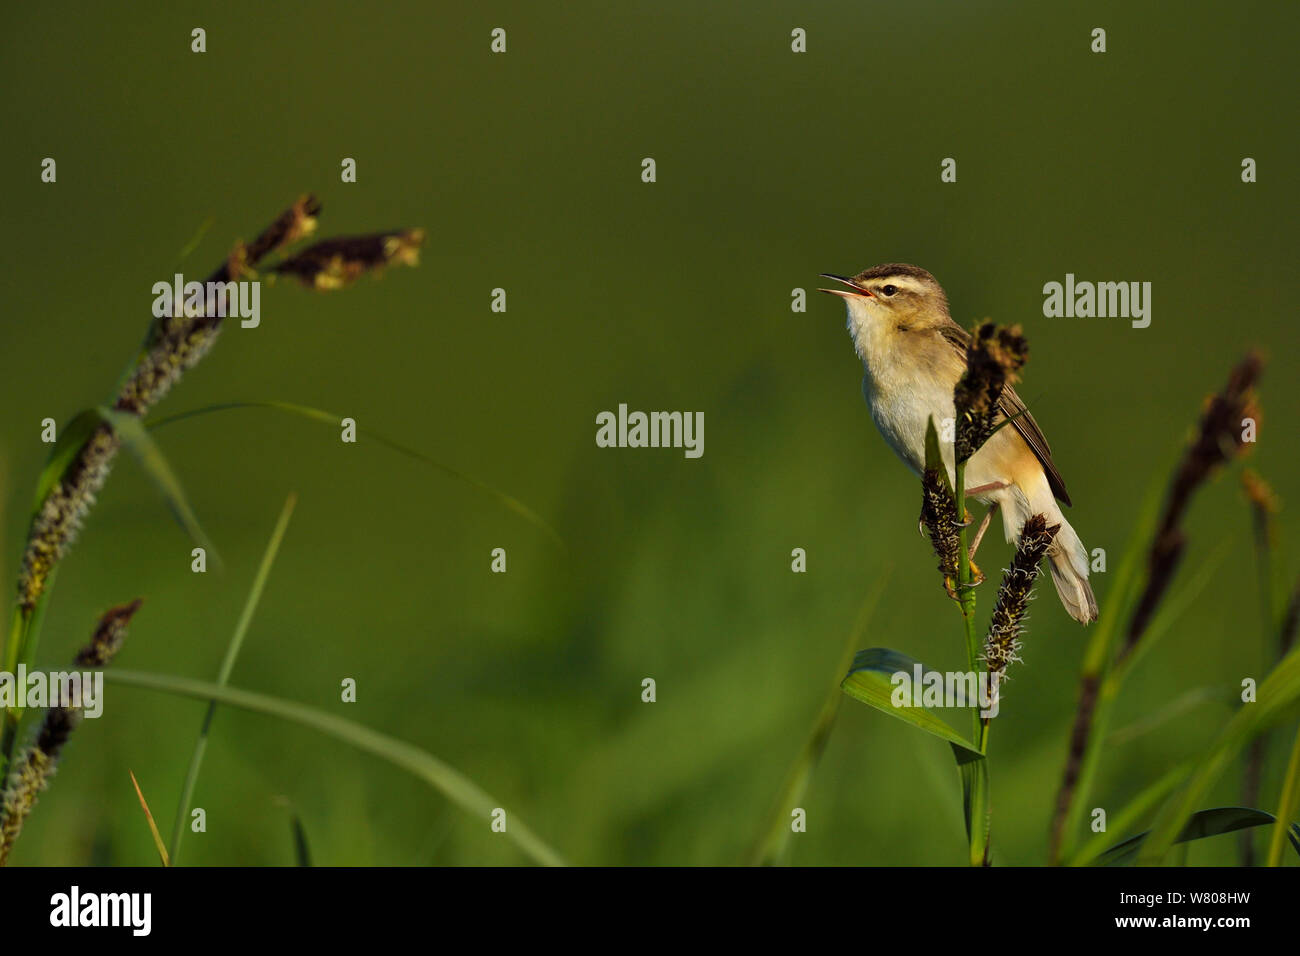 Sedge warbler (Acrocephalus schoenobaenus) singing in sedge, in its habitat, Nemunas River Delta, Lithuania, May. Vulnerable species. Stock Photo